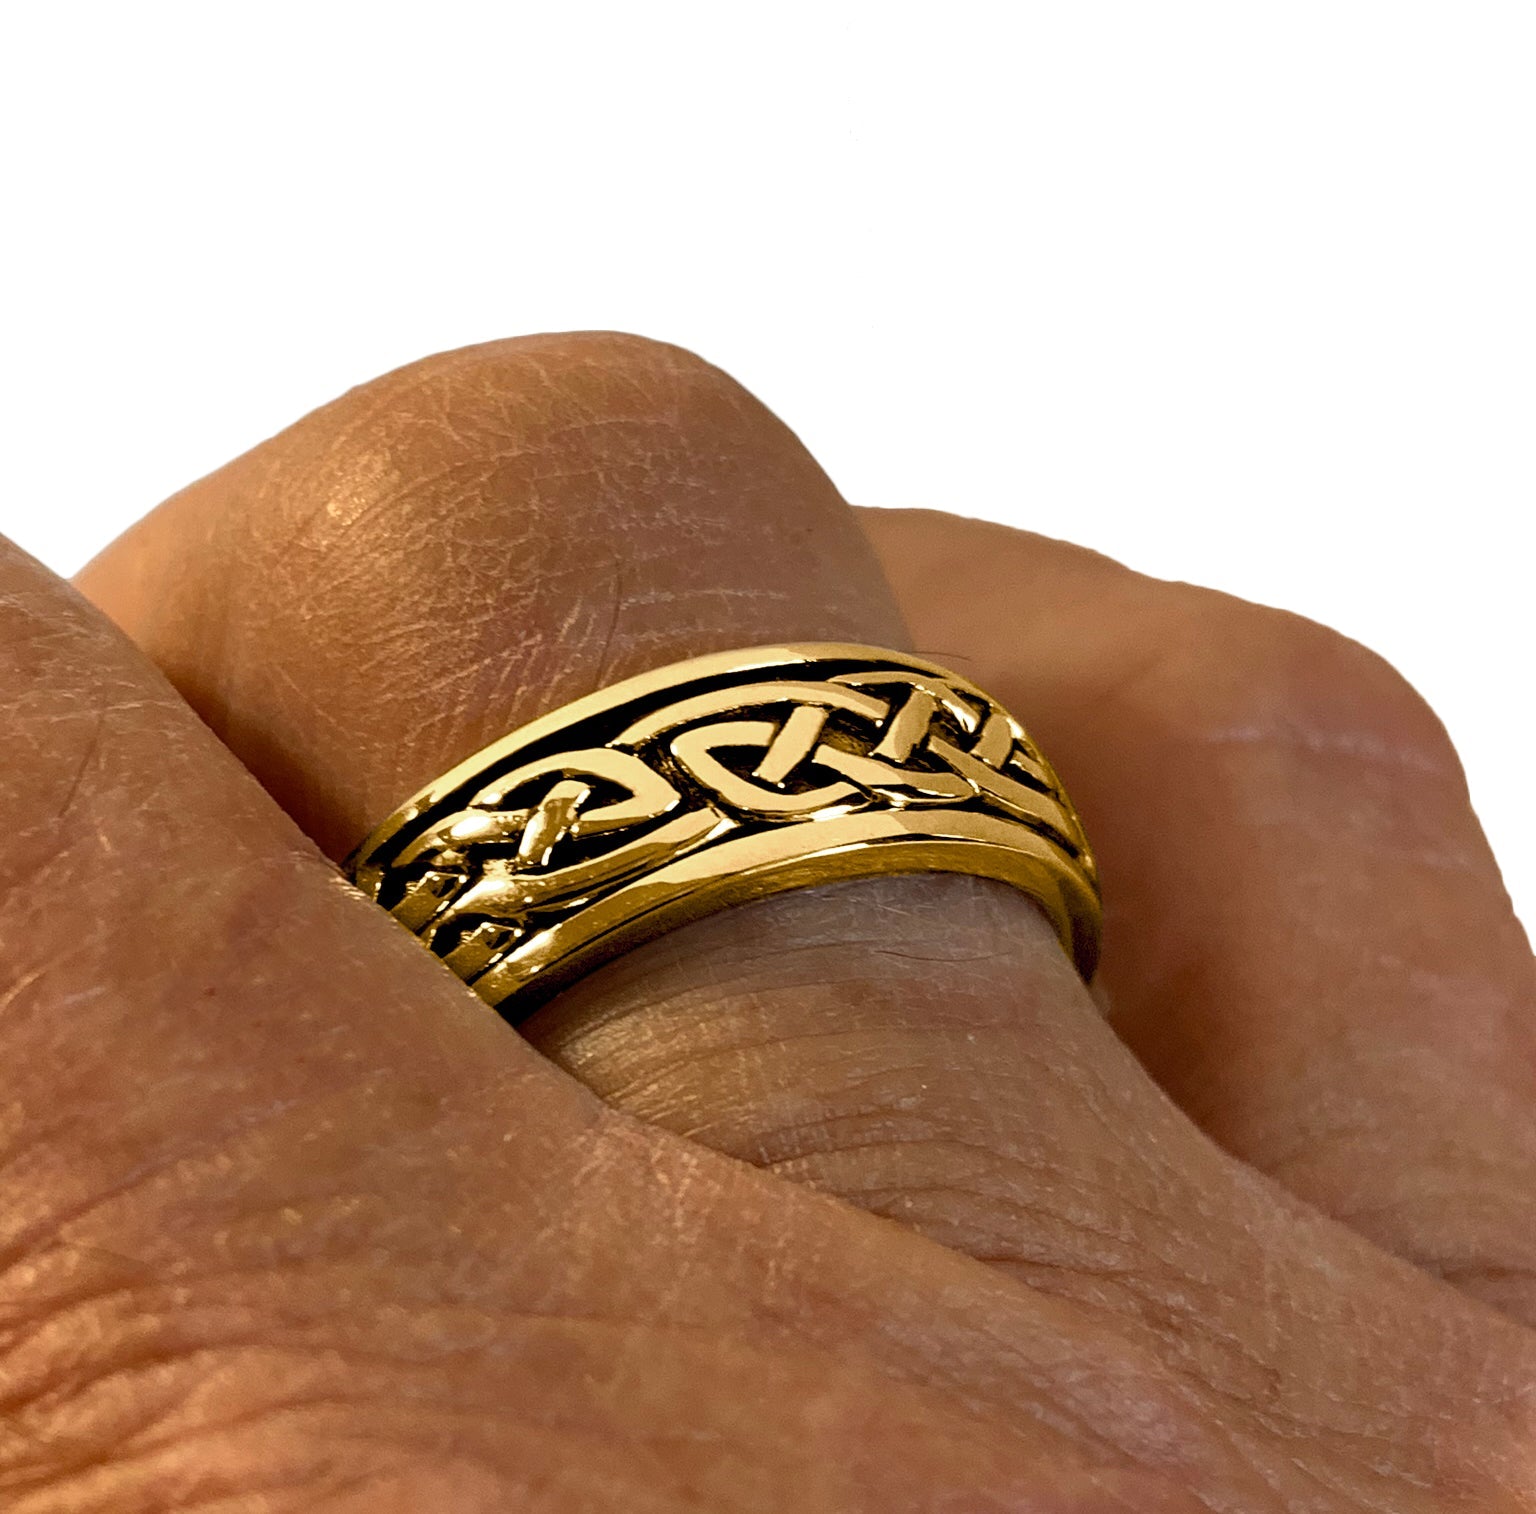 Men's 10K or 14K Gold Irish Celtic Knot Wedding Spinner Ring Band - US Jewels